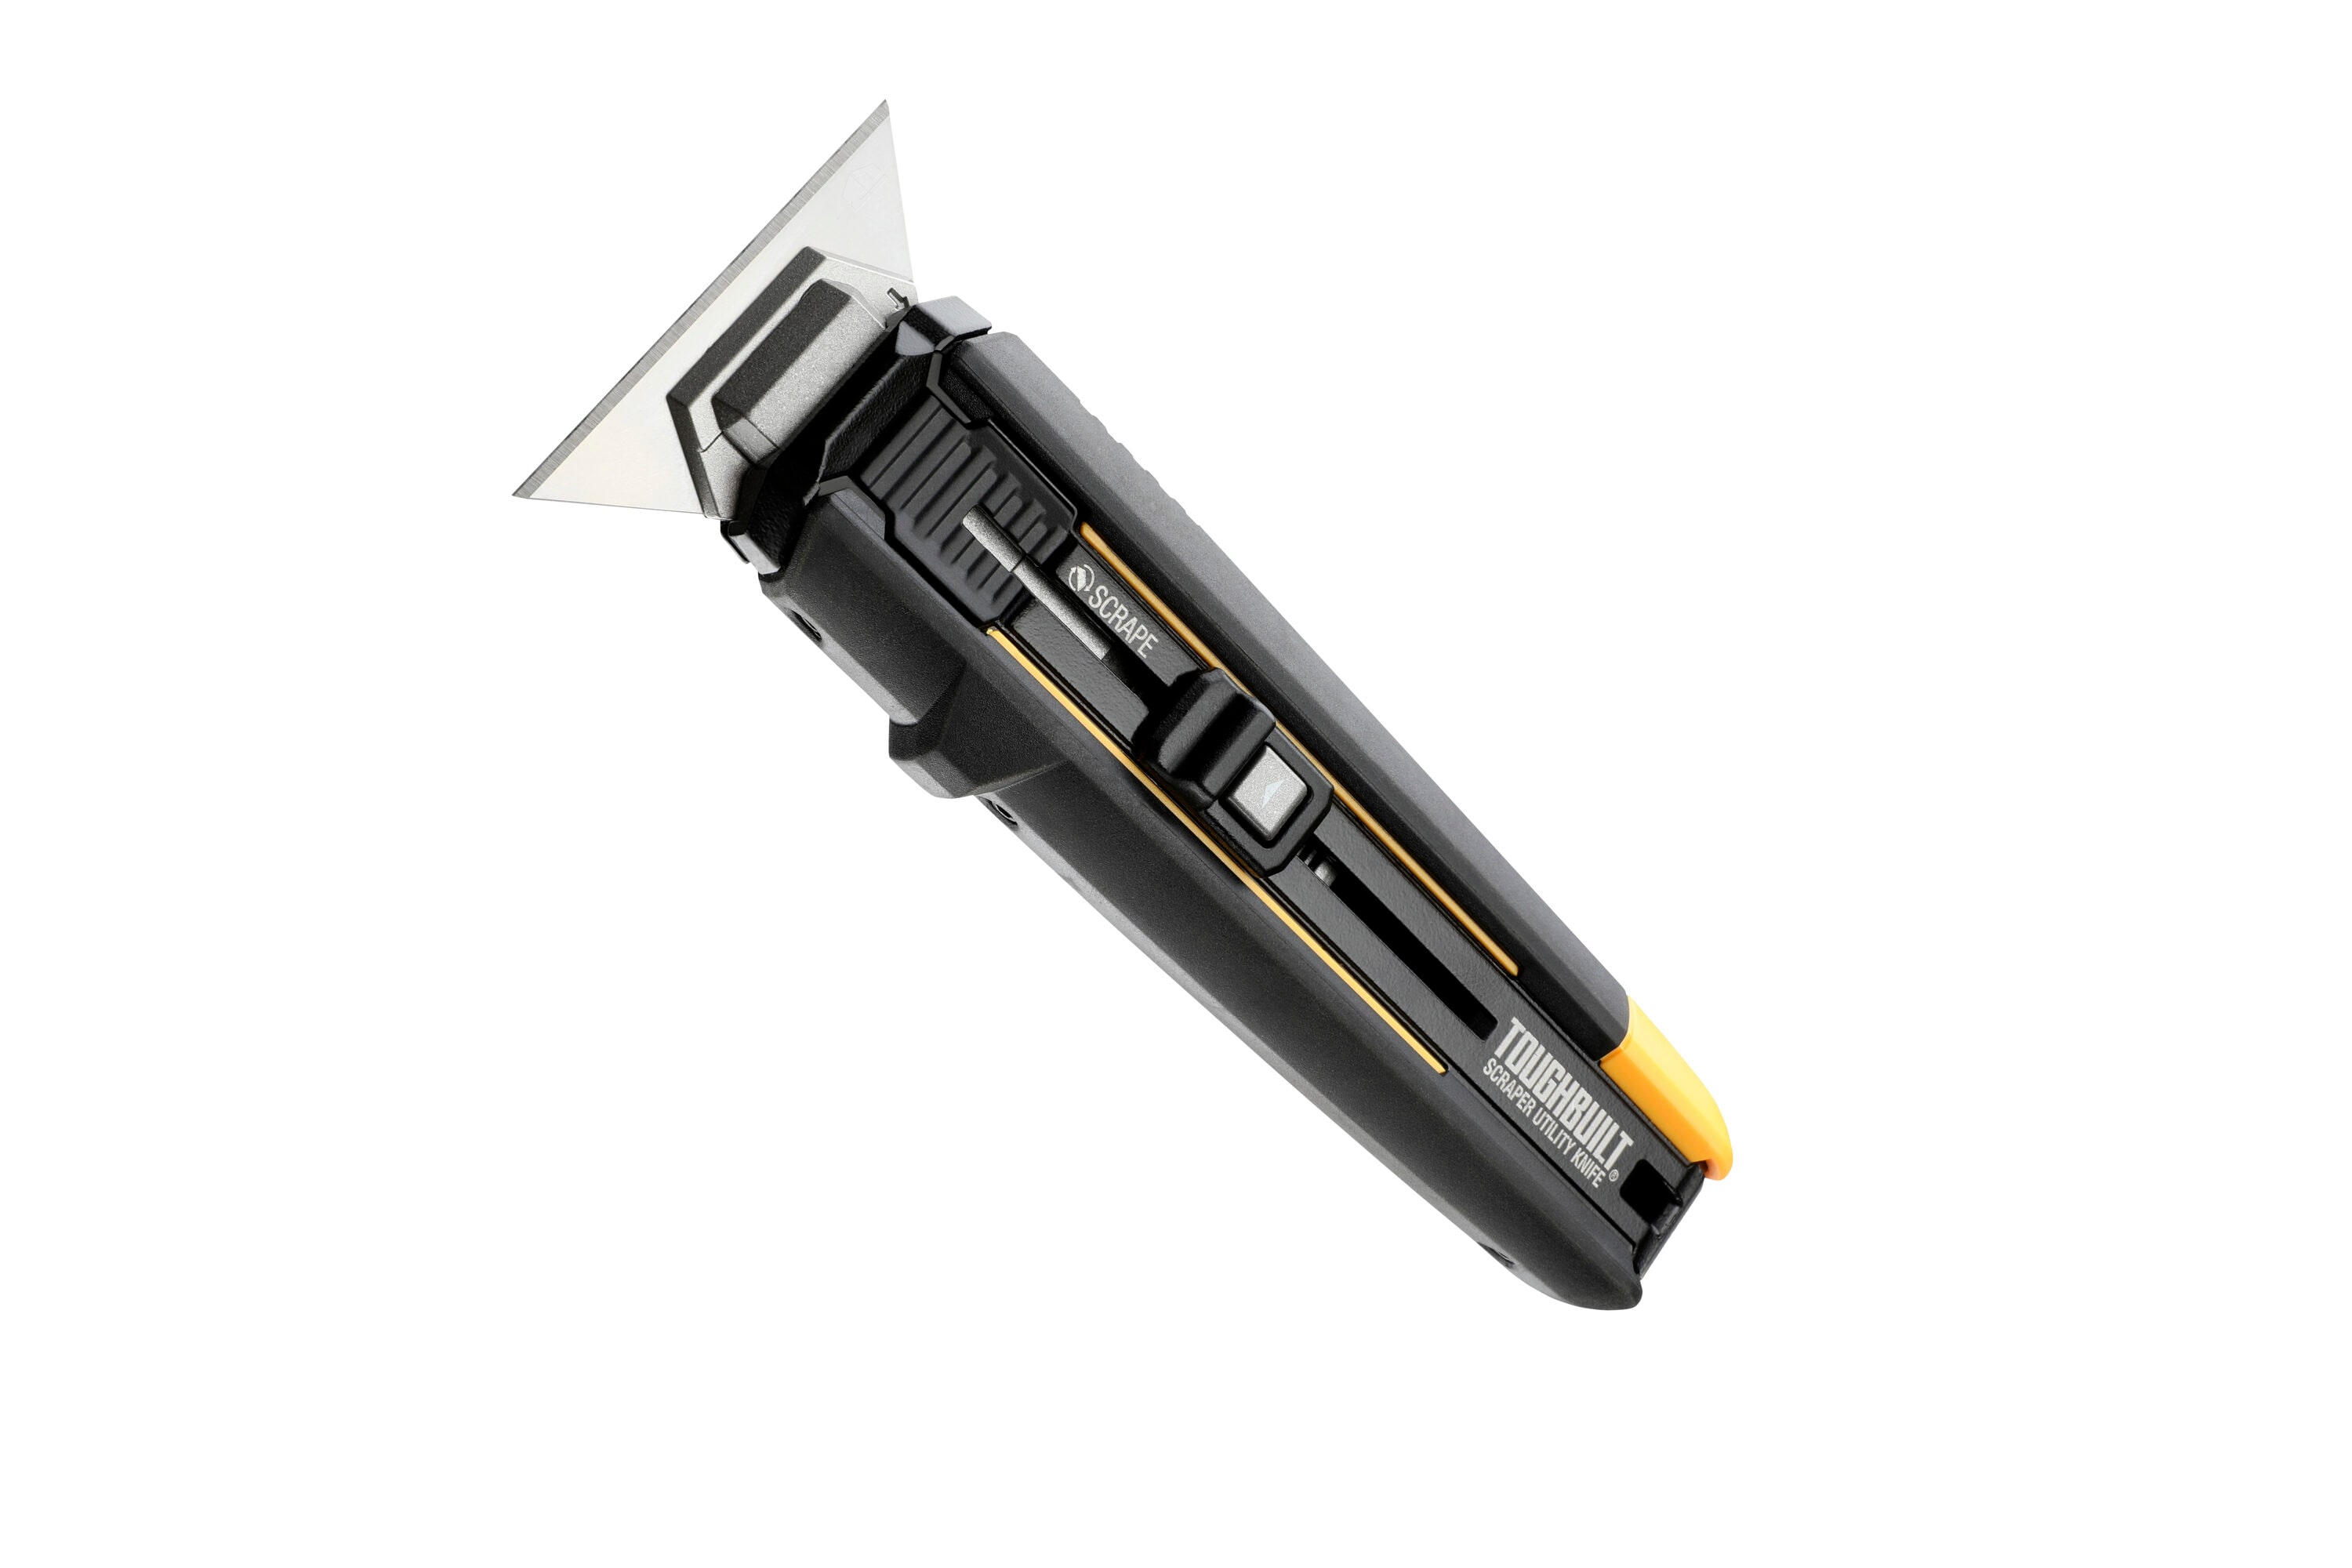 Toughbuilt Scraper Utility Knife Review 